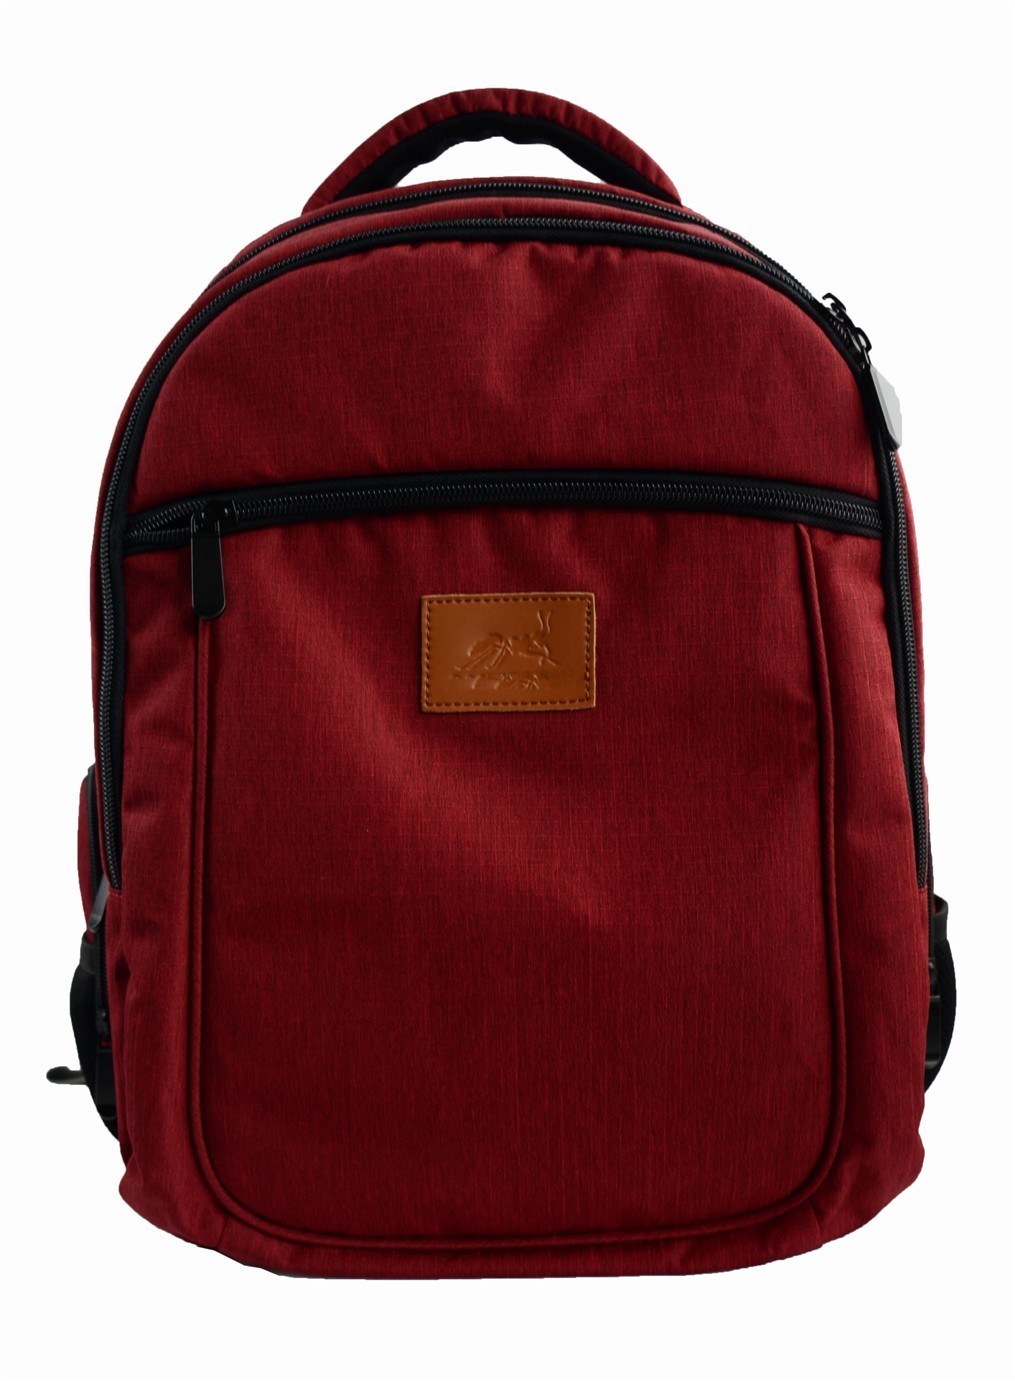 Casual Laptop Backpack Notebook Bag School Bag (SB6420)